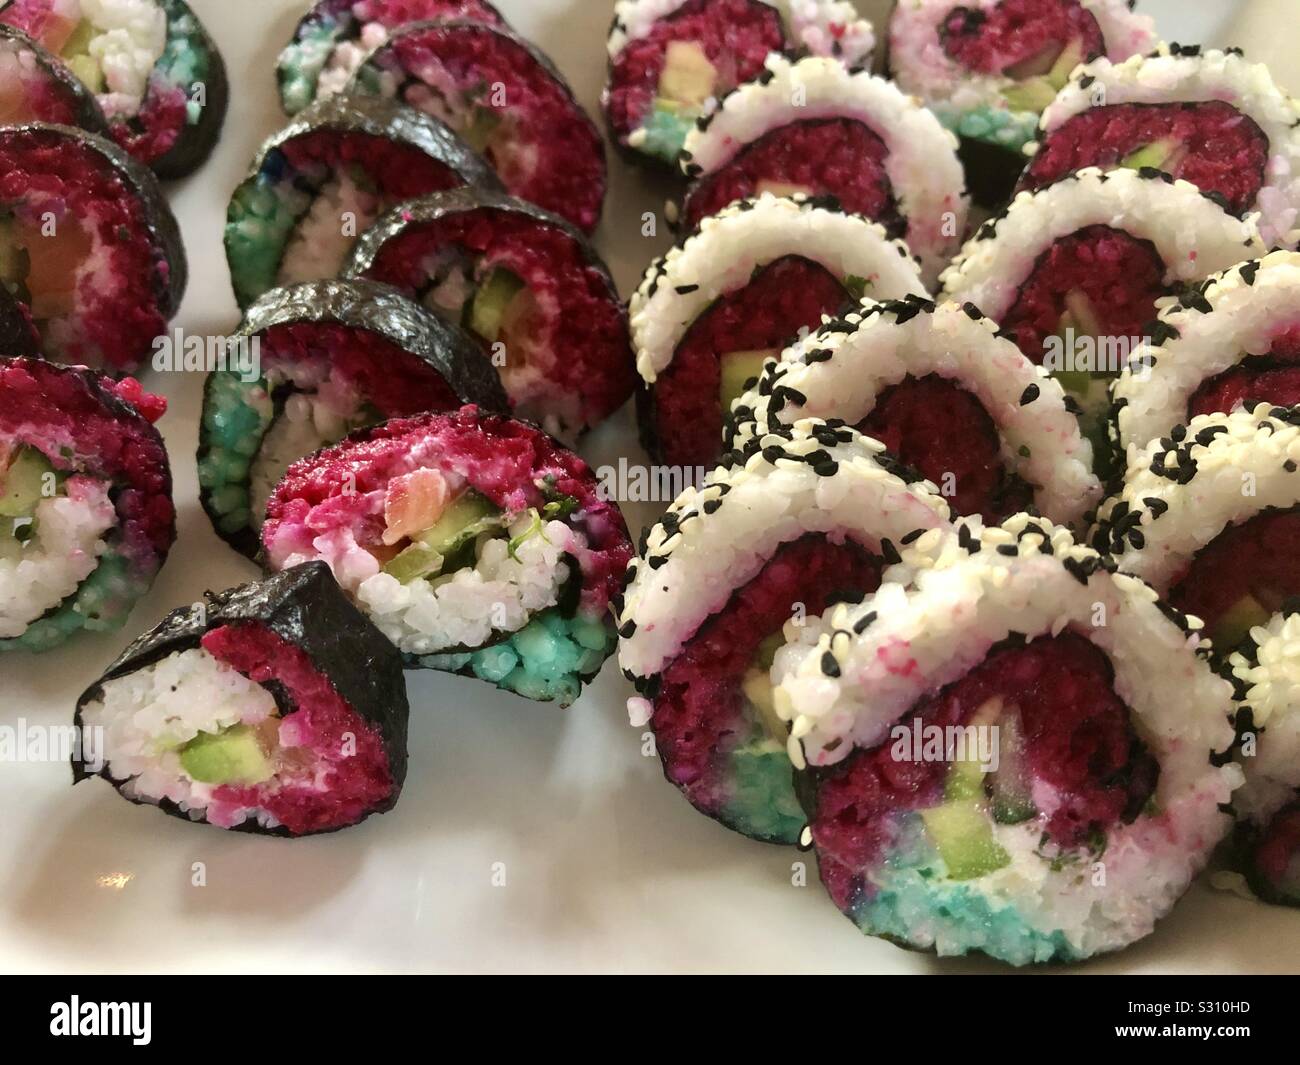 Selbst kreiertes und zubereitetes Sushi en verschiedenen Geschmacksrichtungen und a la de los Varones Foto de stock